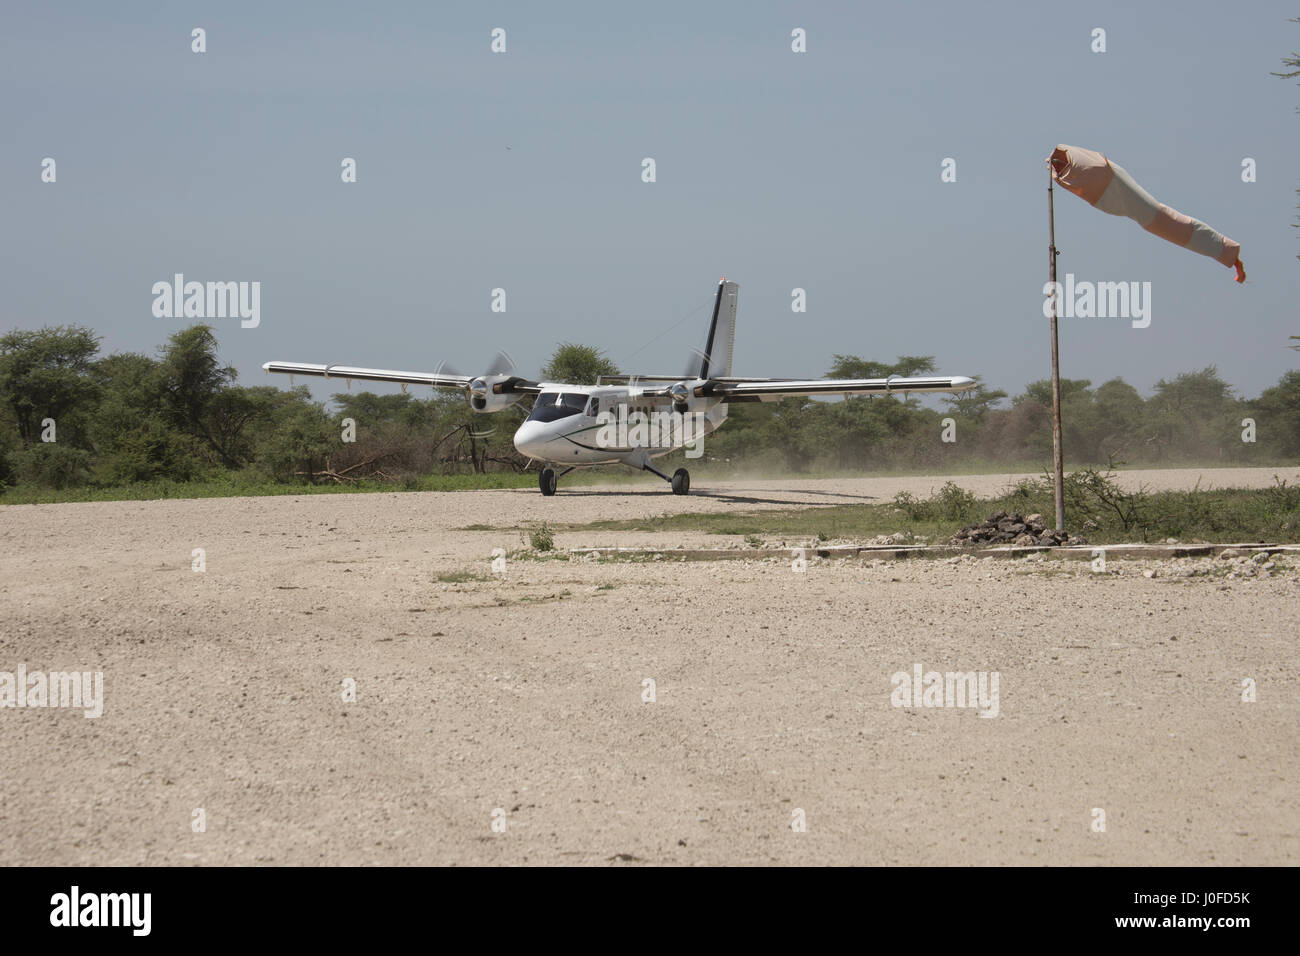 Small prop plane on dirt runway in Serengeti, Tanzania, Africa. Stock Photo